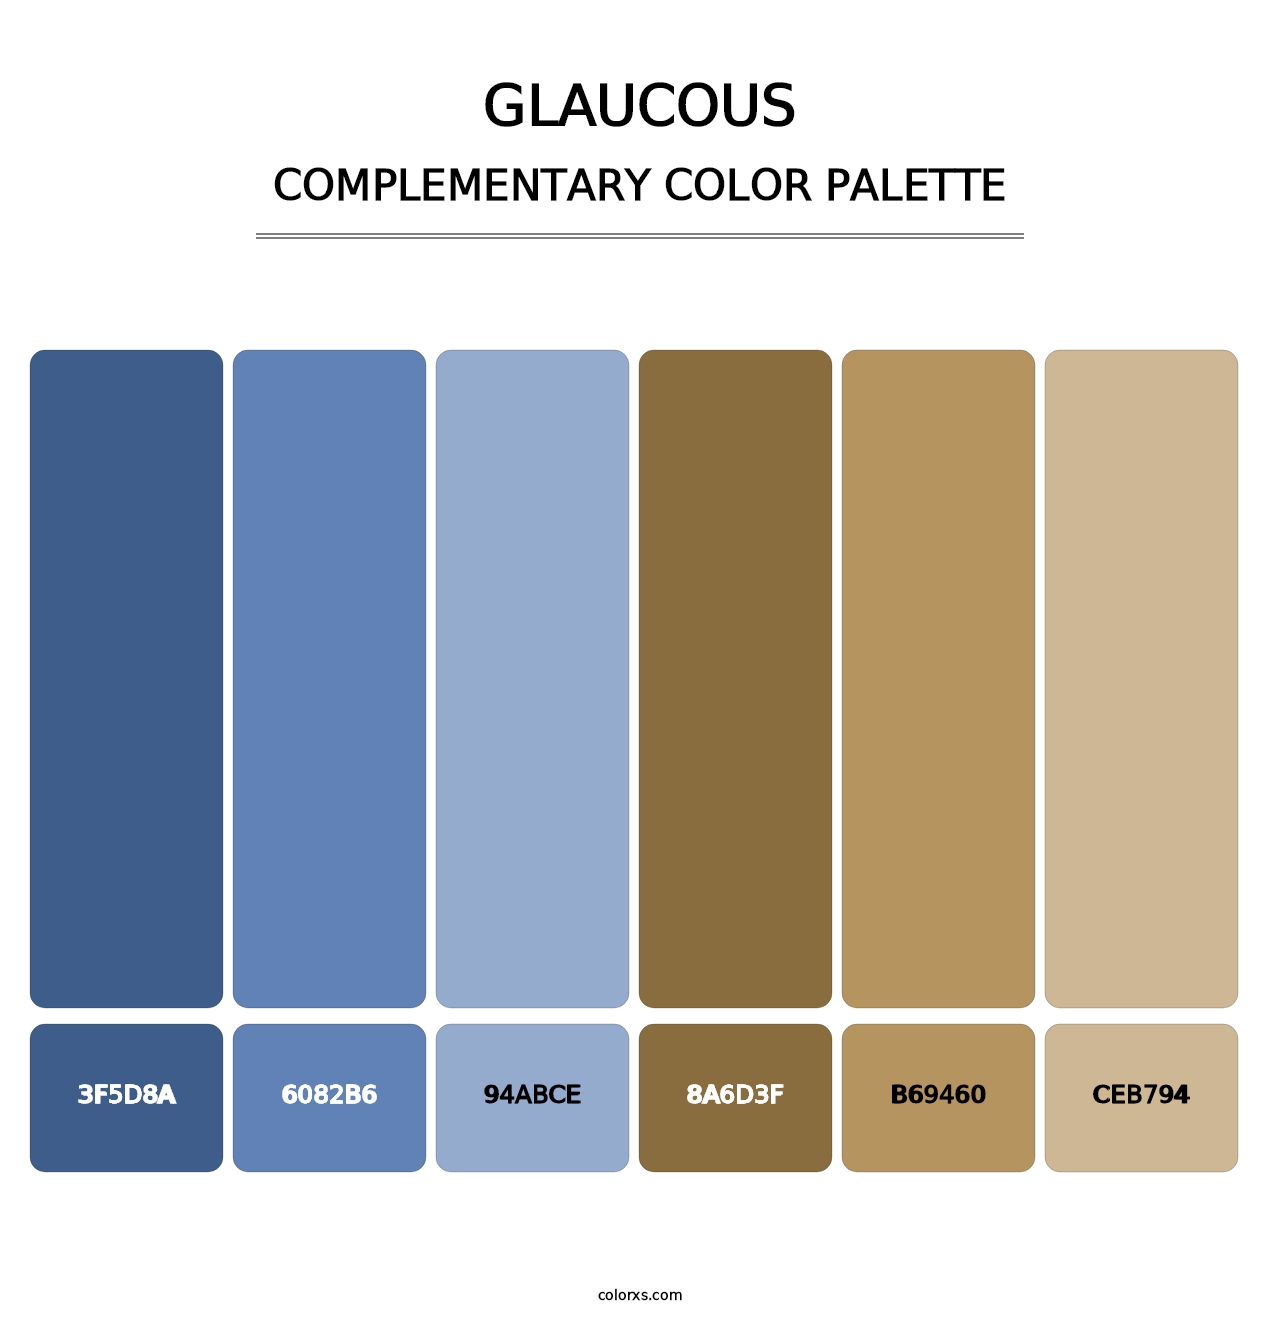 Glaucous - Complementary Color Palette